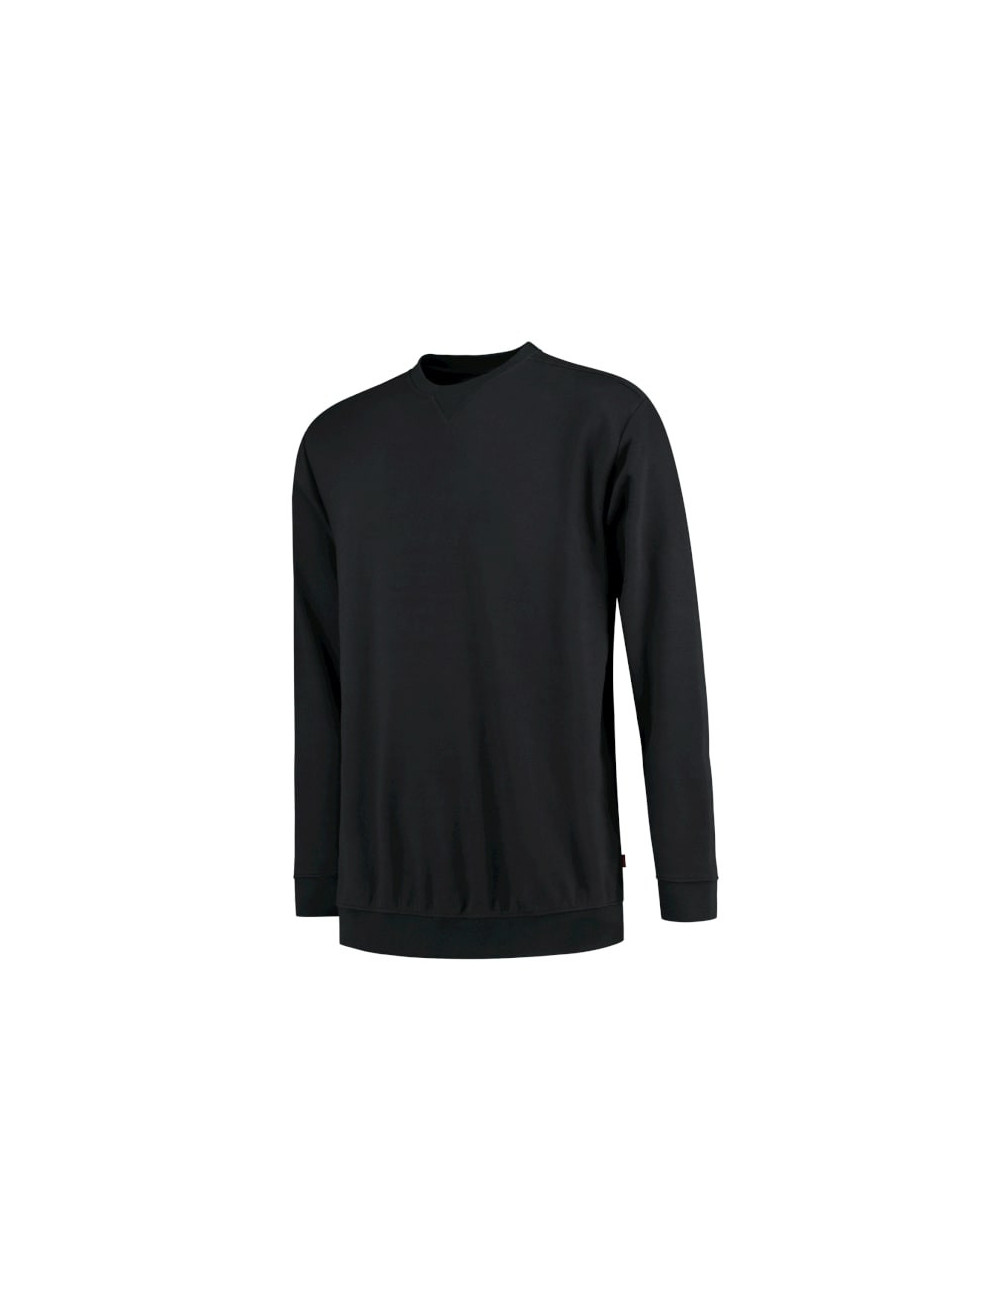 Unisex sweatshirt sweater washable 60 °c t43 black Adler Tricorp